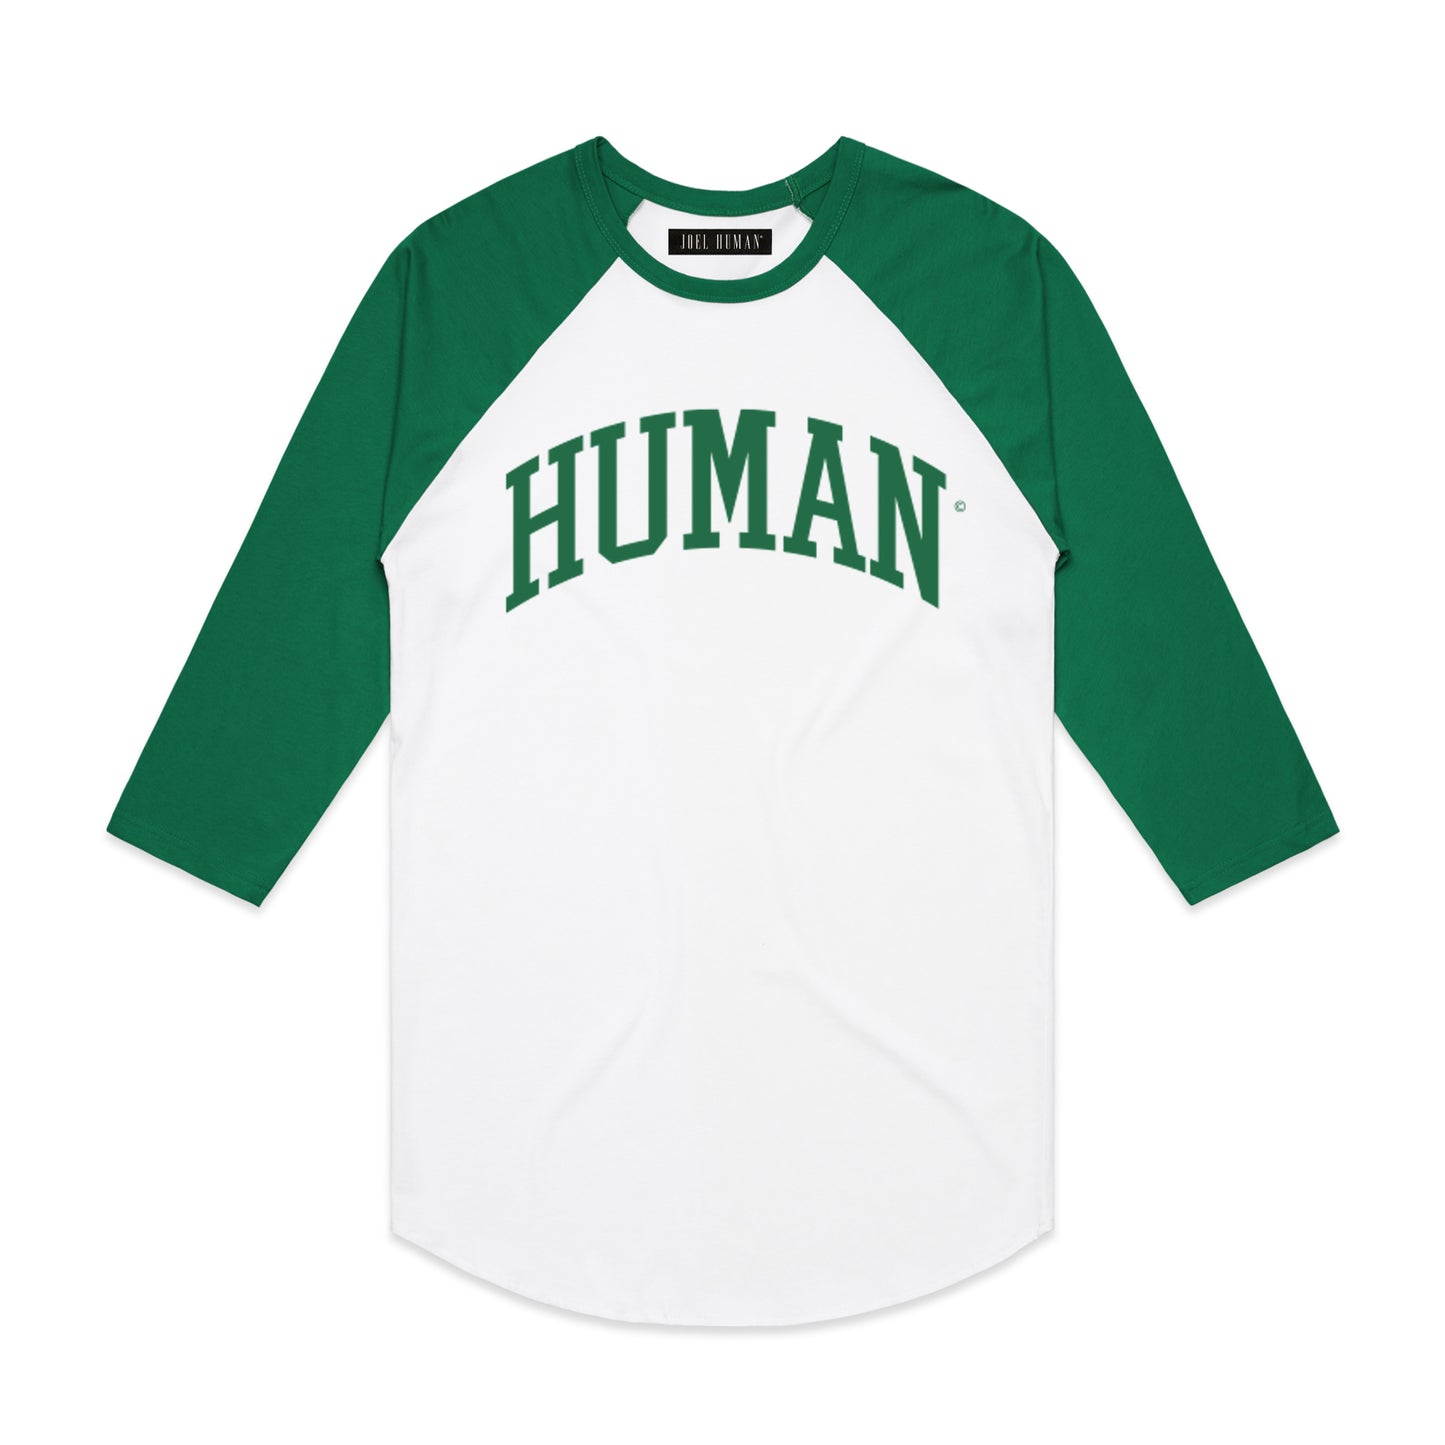 Camiseta raglán humana